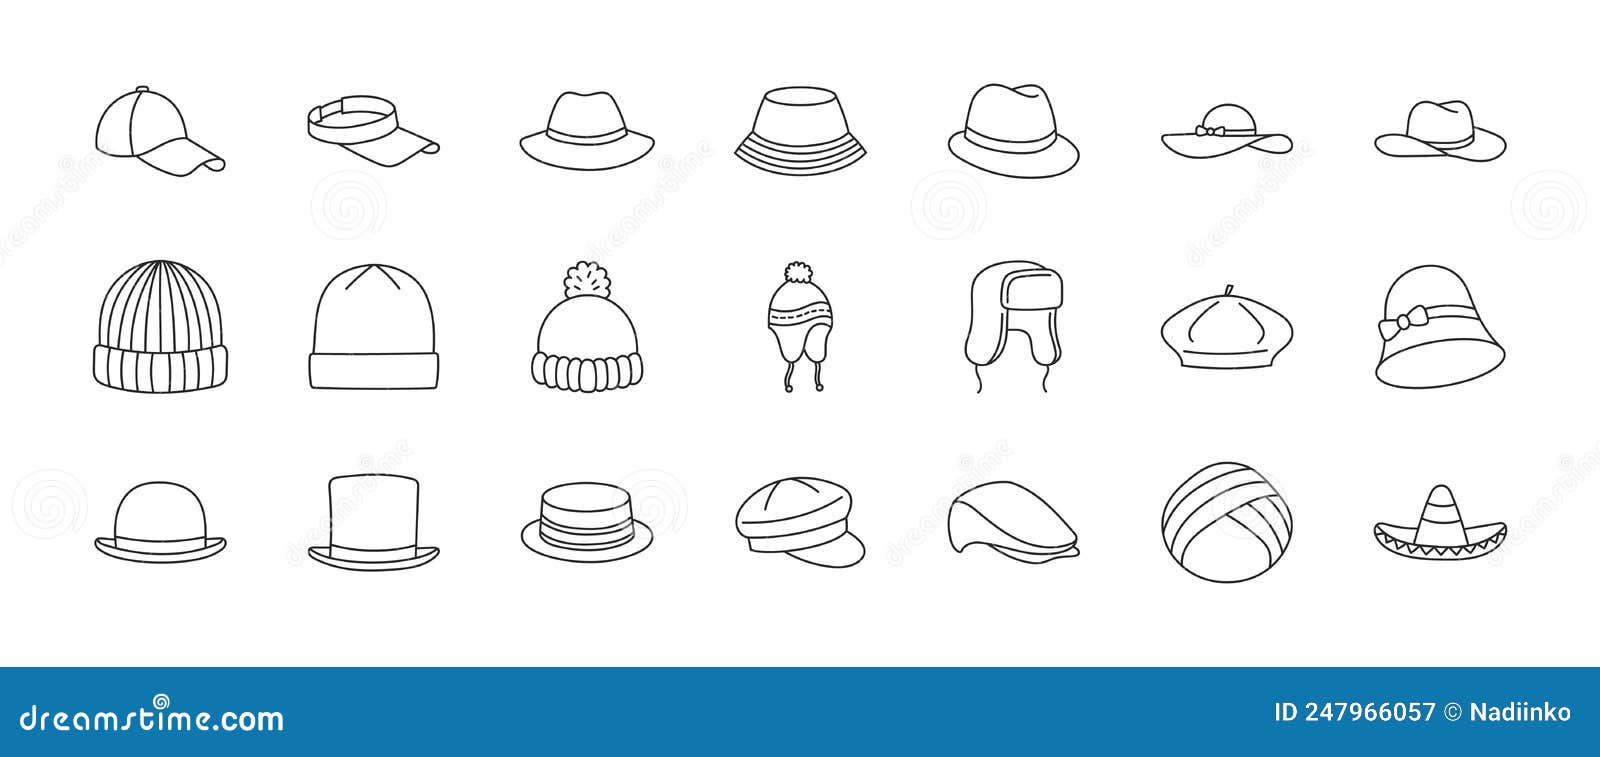 hats doodle  including icons - vintage fedora, beanie, gentleman bowler, baseball cap, sun vizor, beret